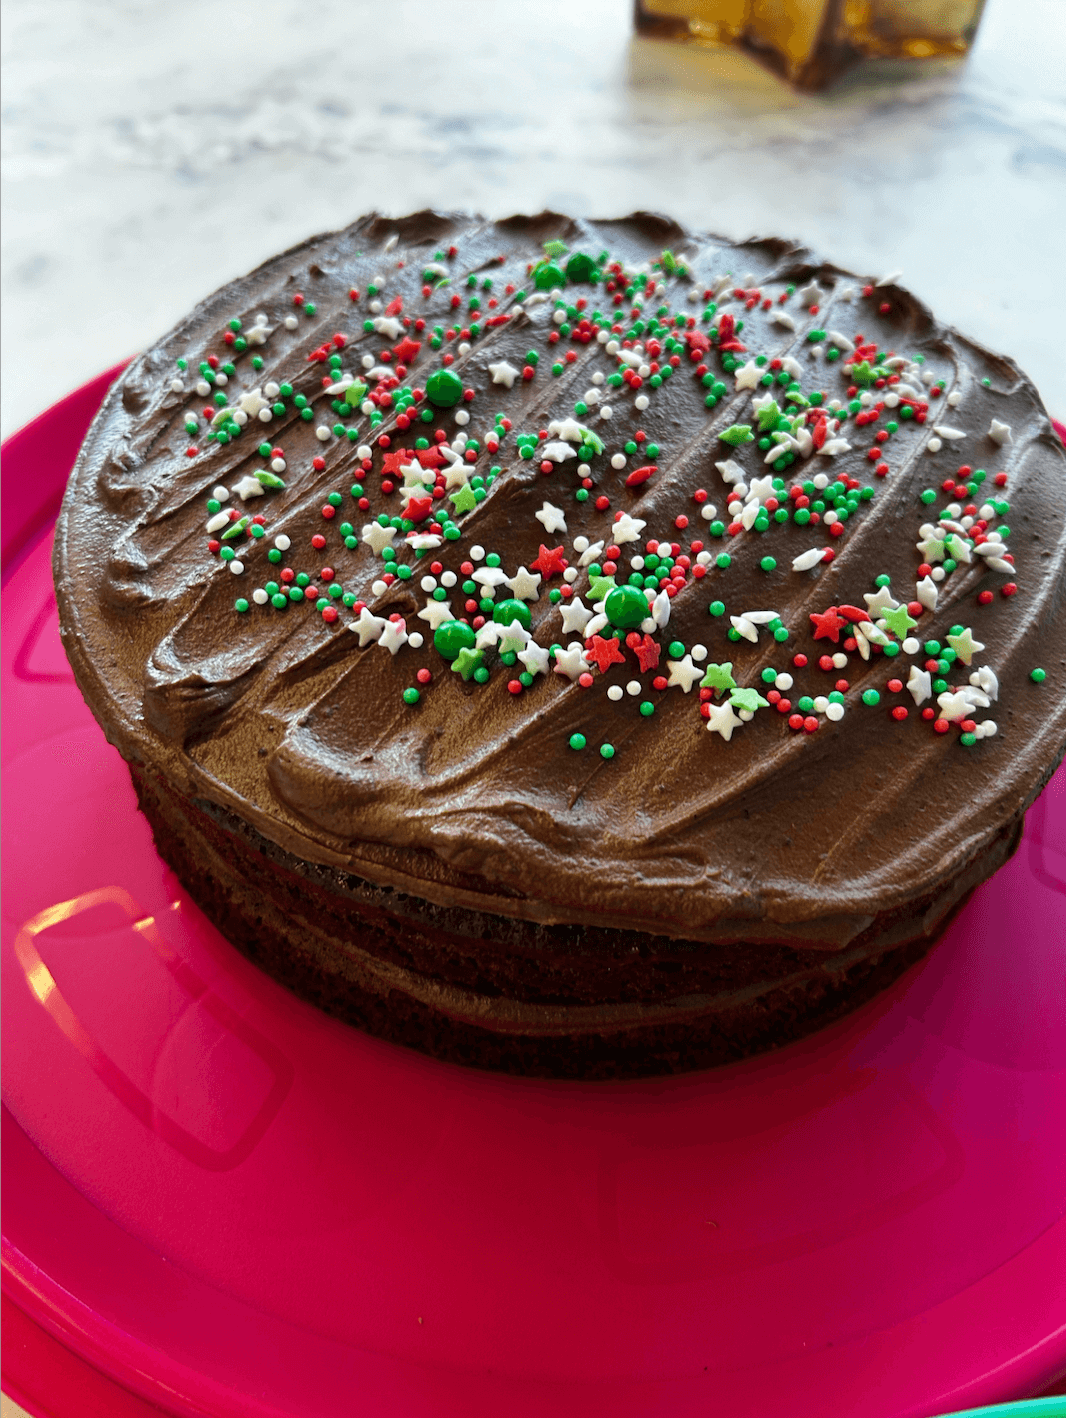 A vegan chocolate cake covered in sprinkles